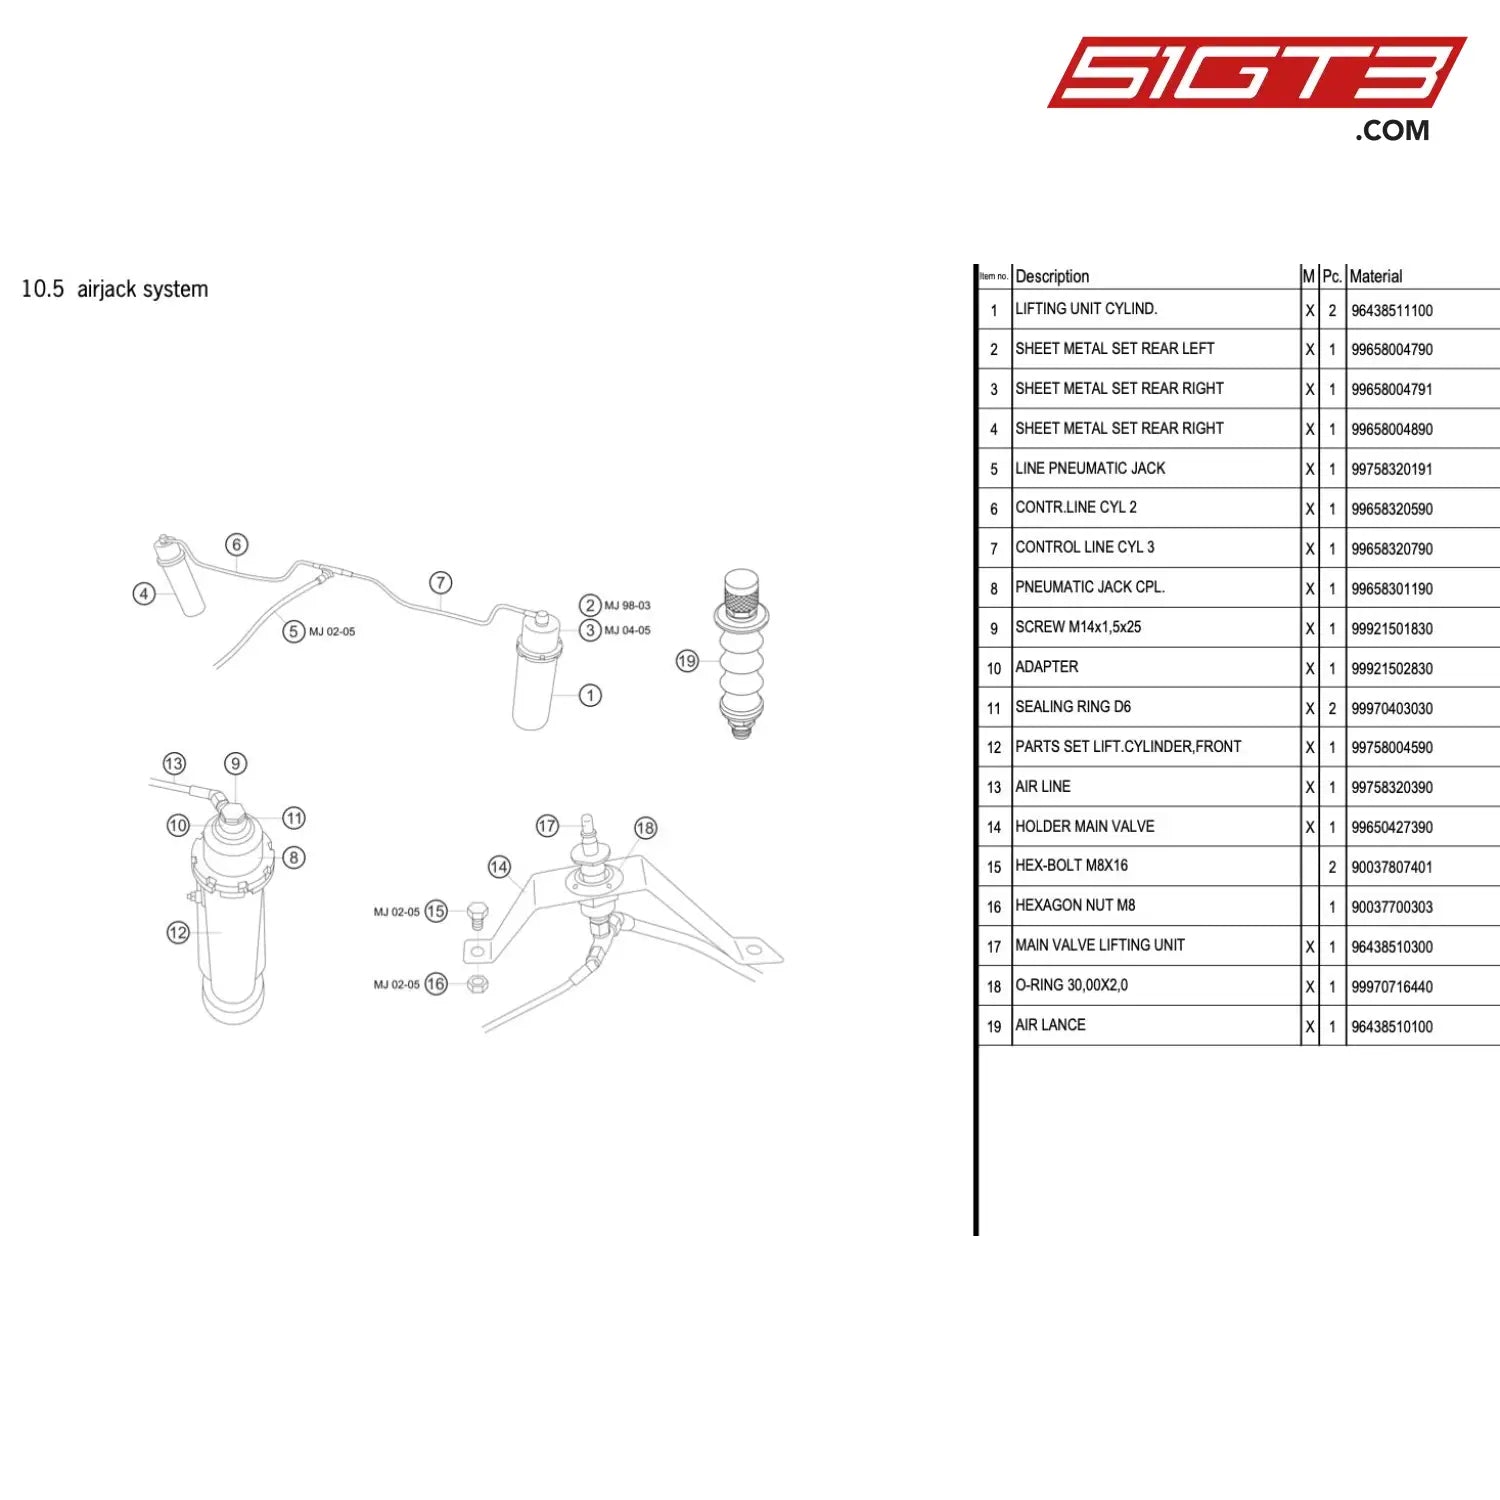 Parts Set Lift.cylinder Front - 99758004590 [Porsche 911 Gt3 Cup Type 996] Airjack System